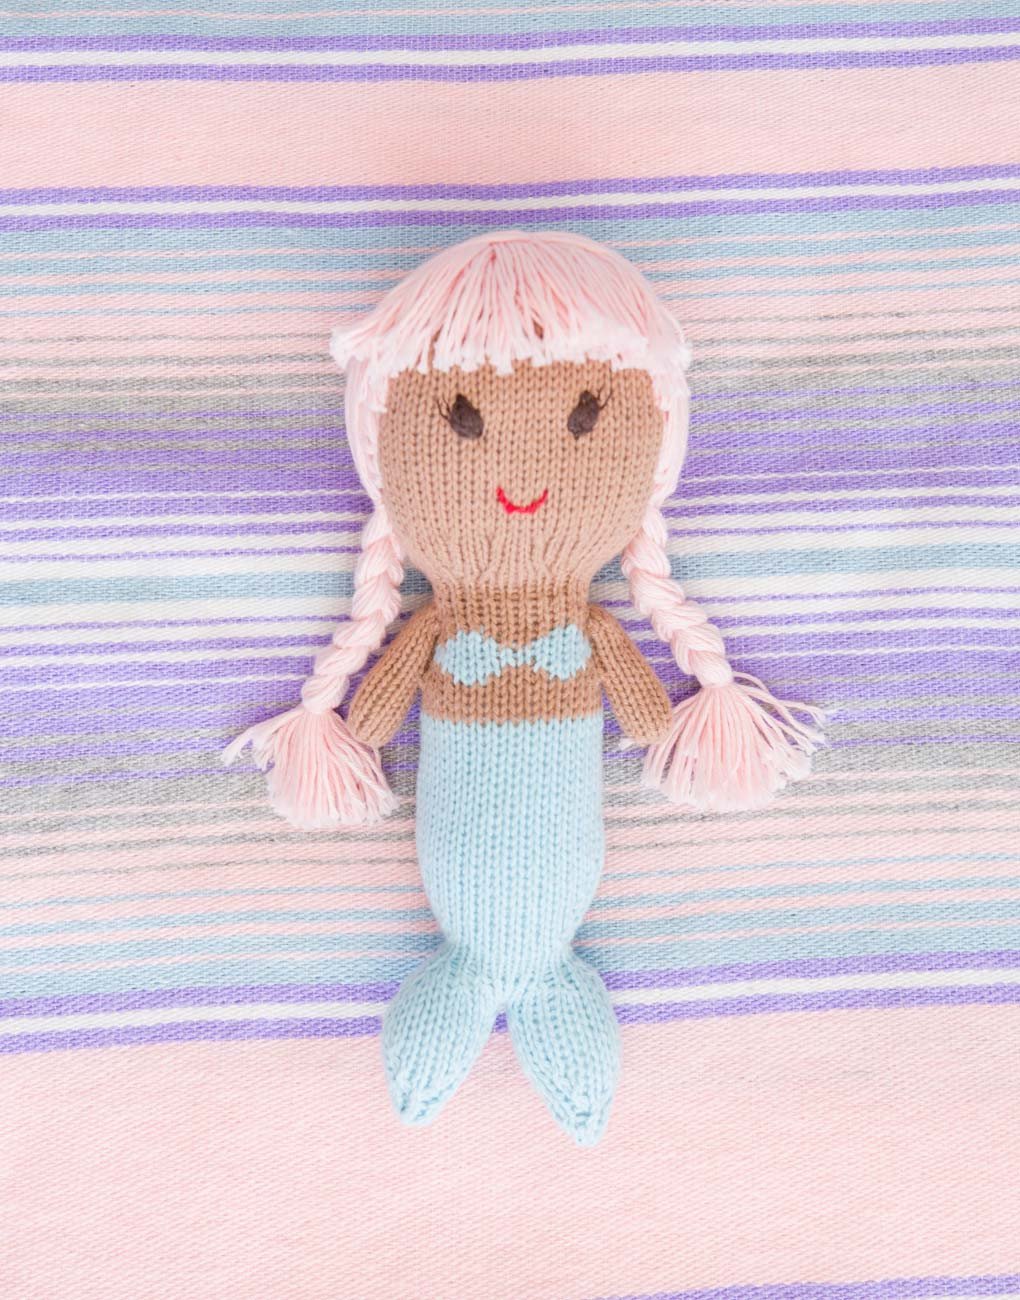 Mermaid doll with pink hair